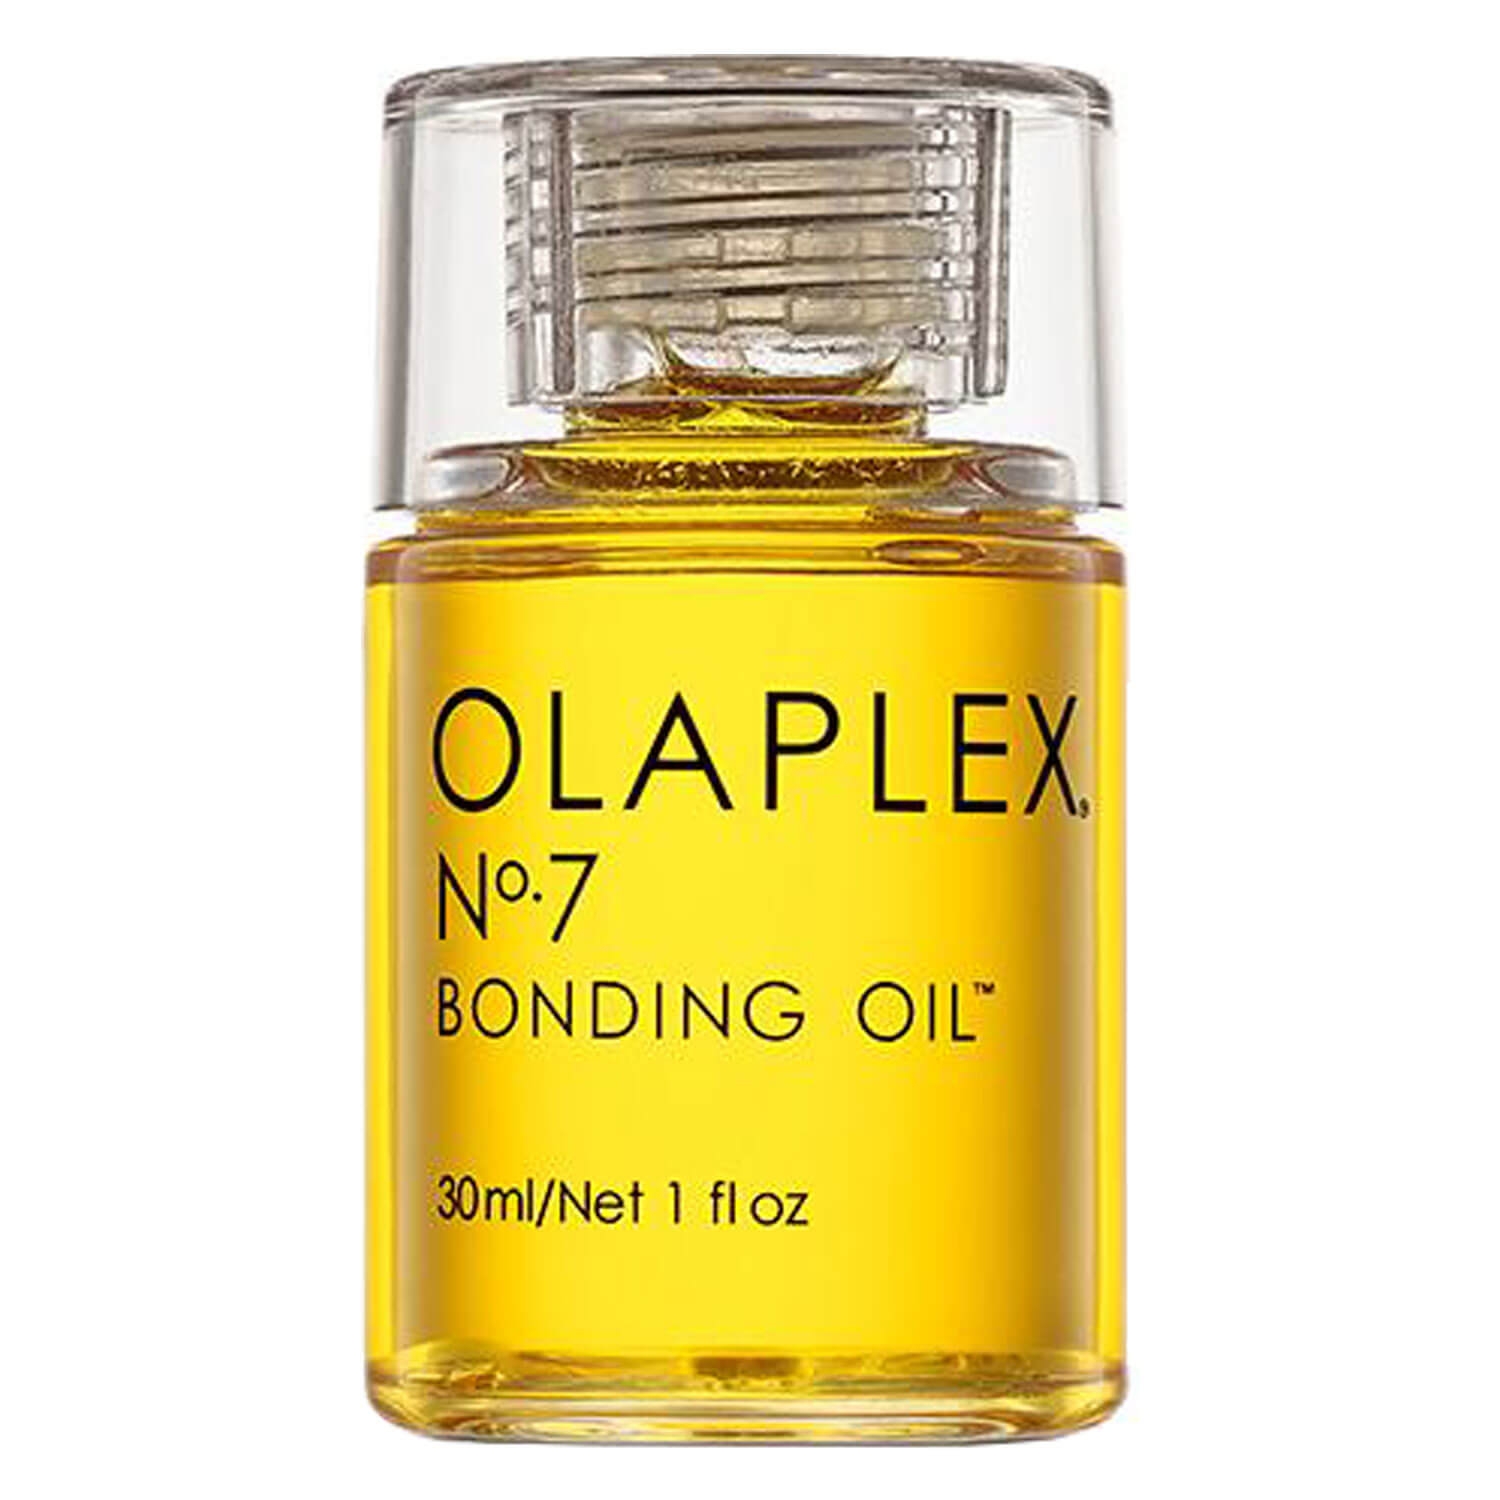 Product image from Olaplex - Bonding Oil No. 7